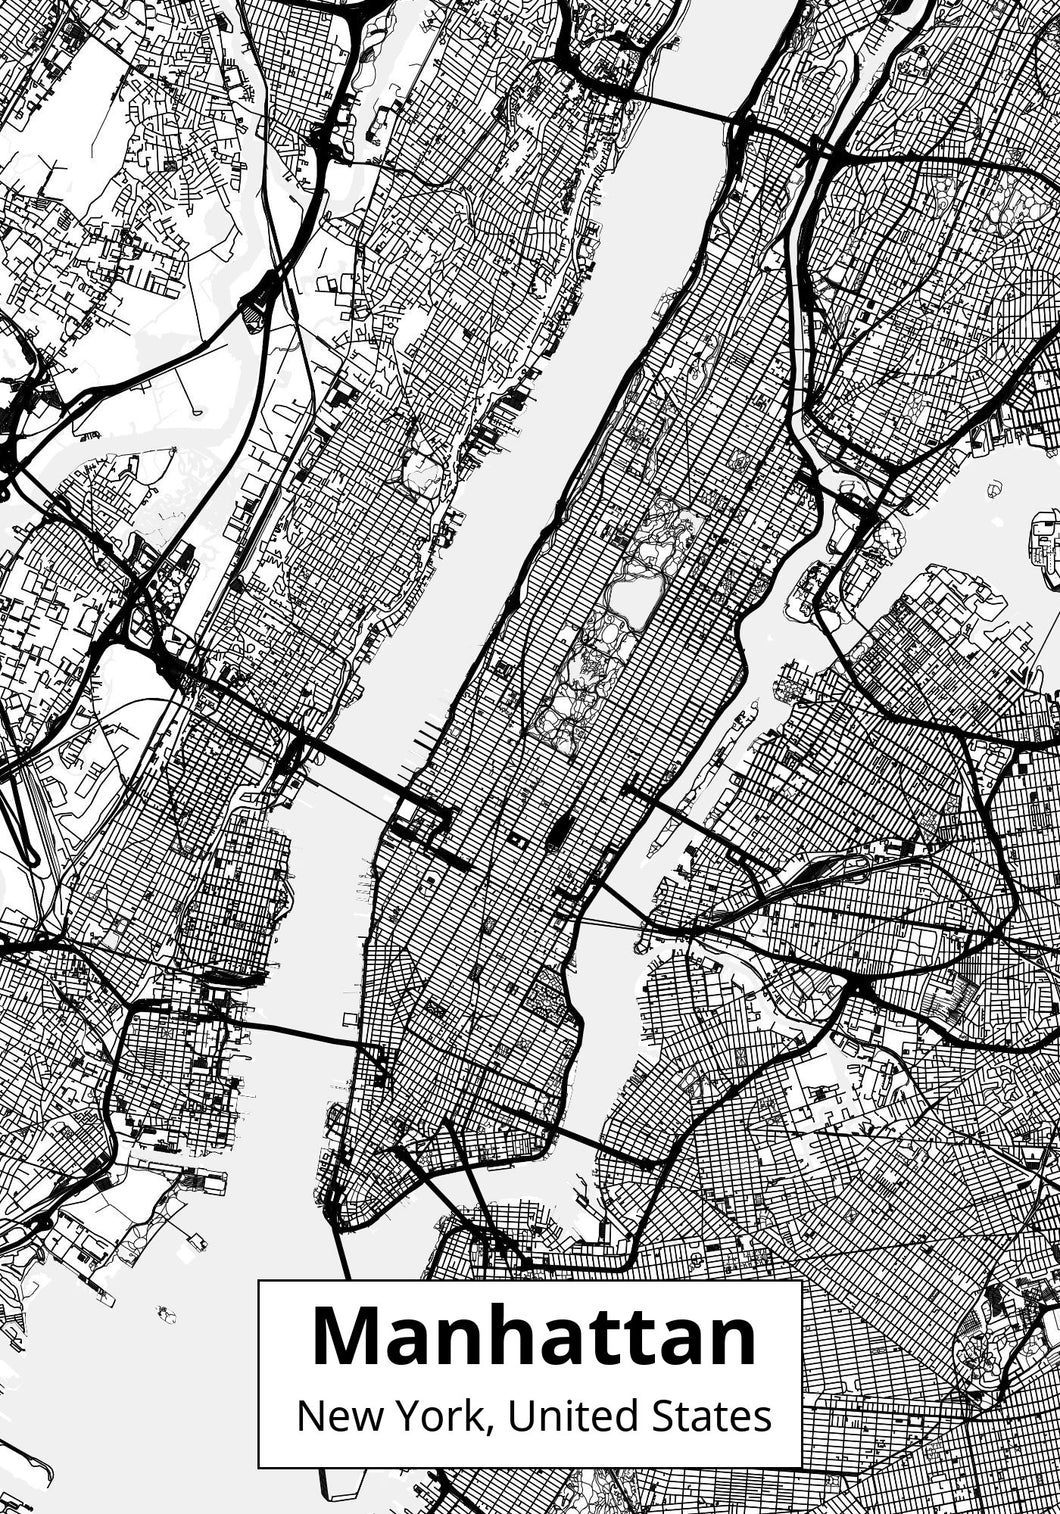 City Map - Overlay